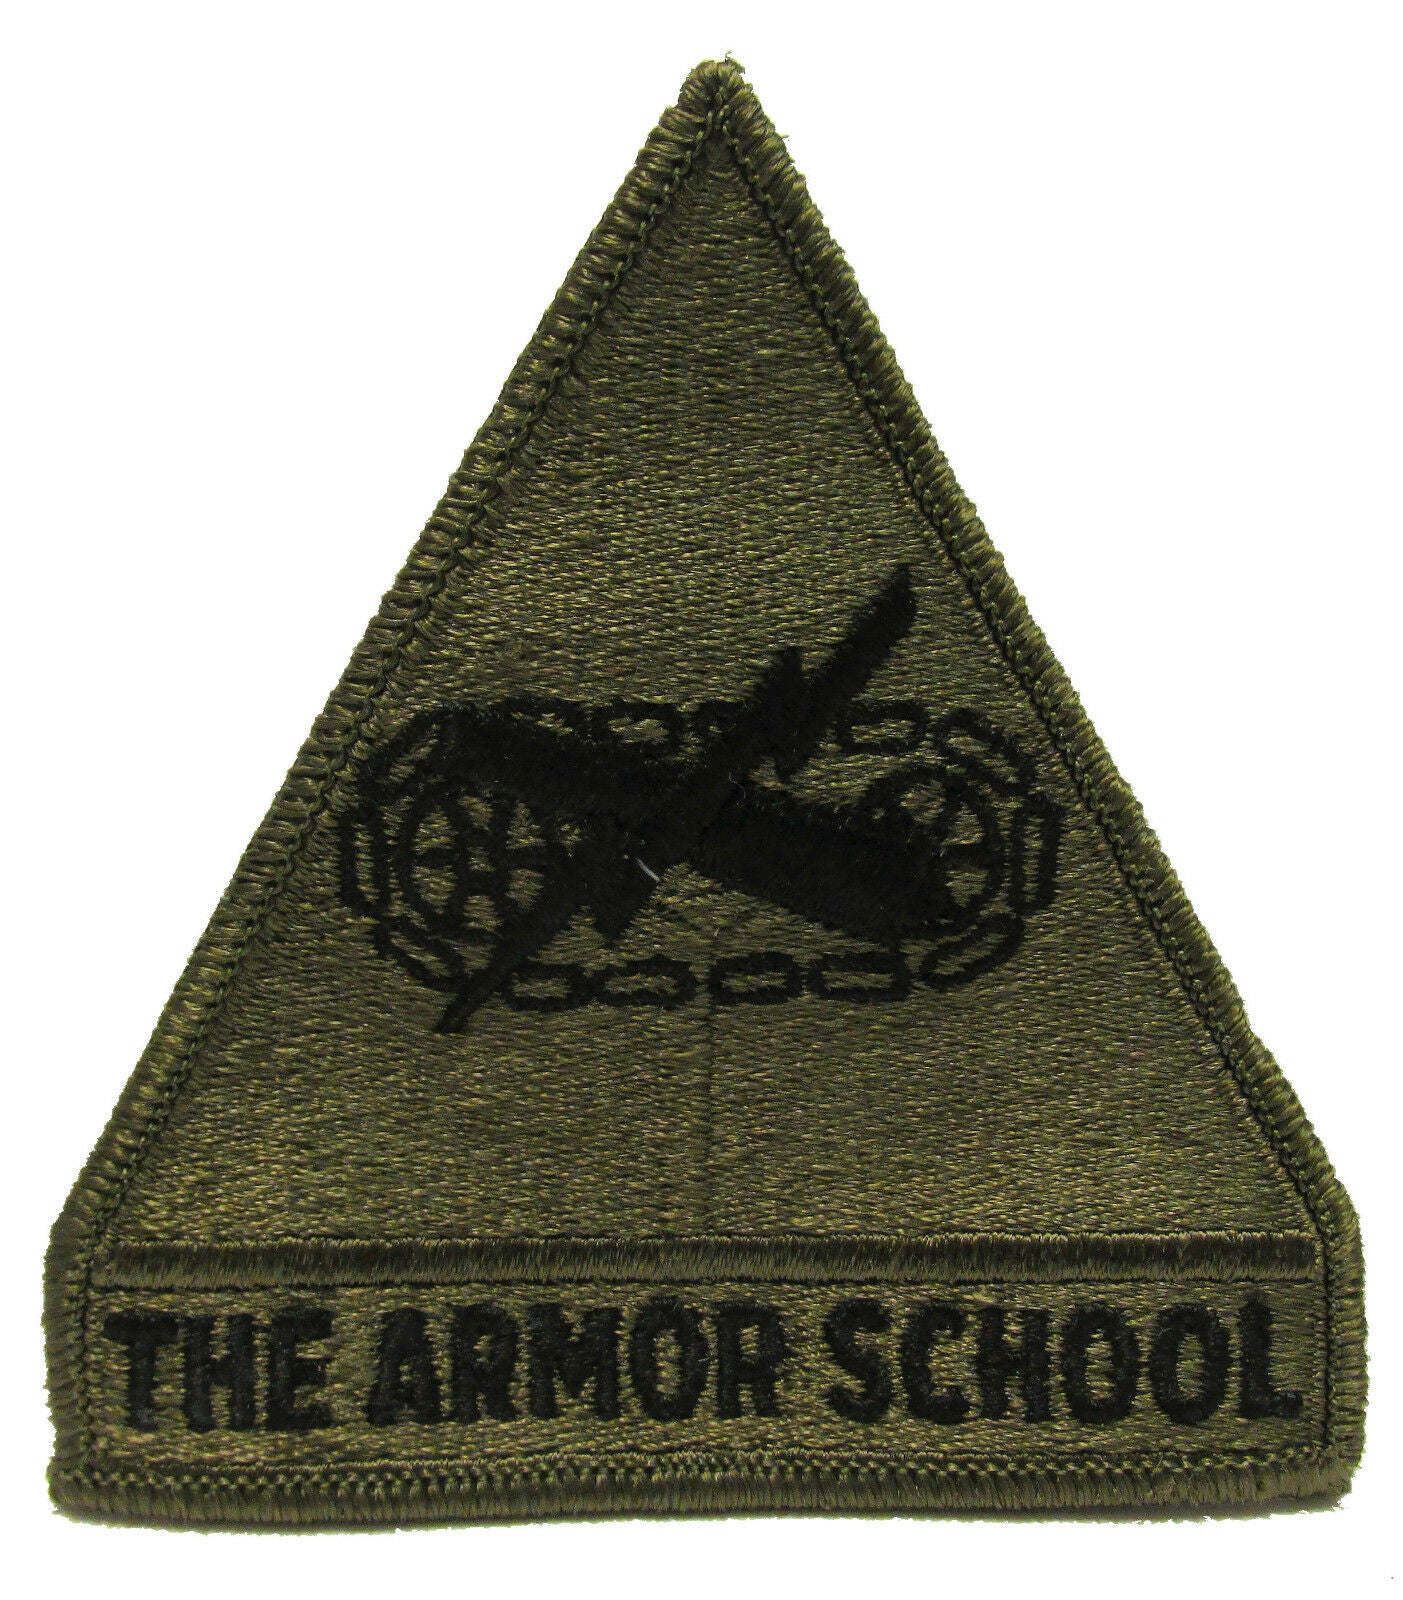 Lot of 10 - 1970s Military Surplus Vietnam Era - Army Armor School Patch Subdued